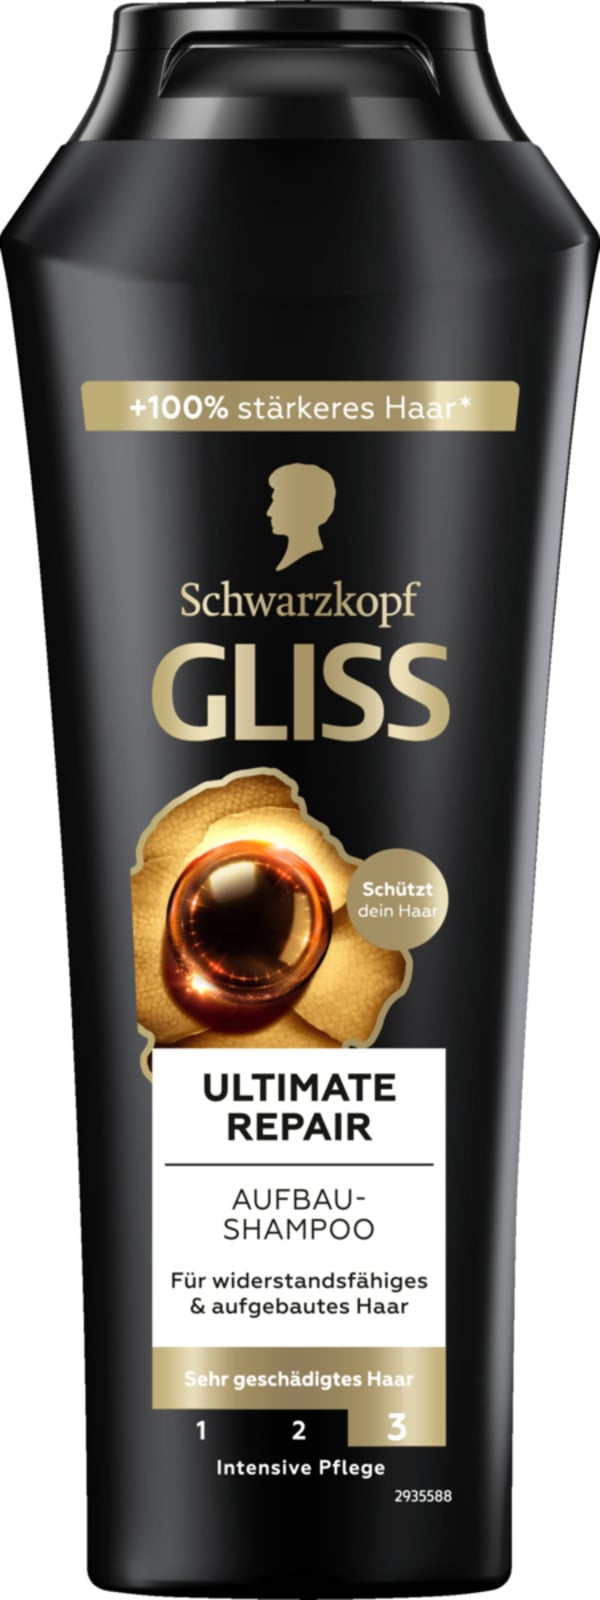 Bild 1 von Gliss Ultimate Repair Shampoo